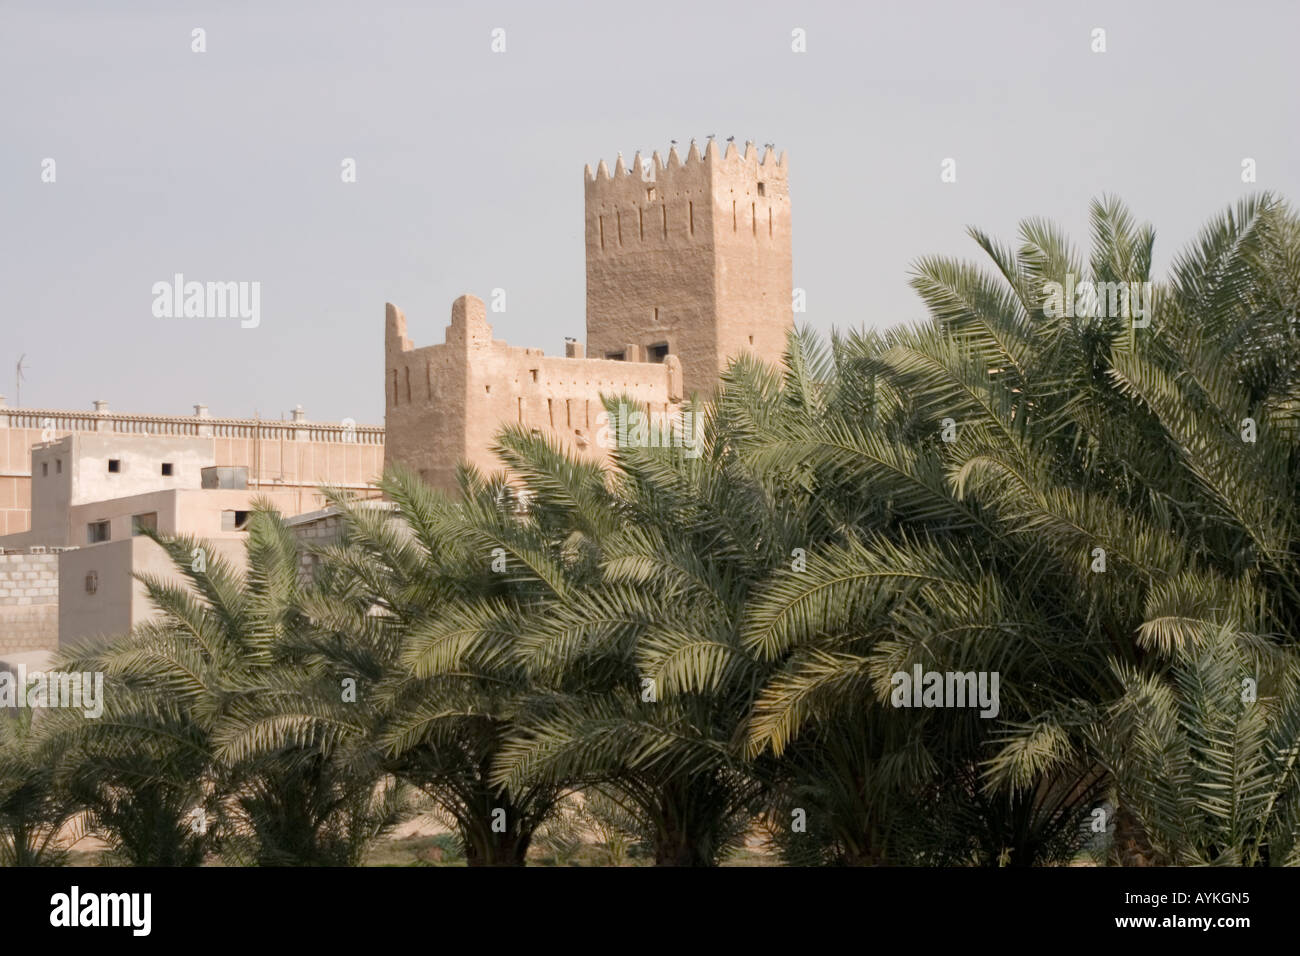 oasis in qatar Stock Photo